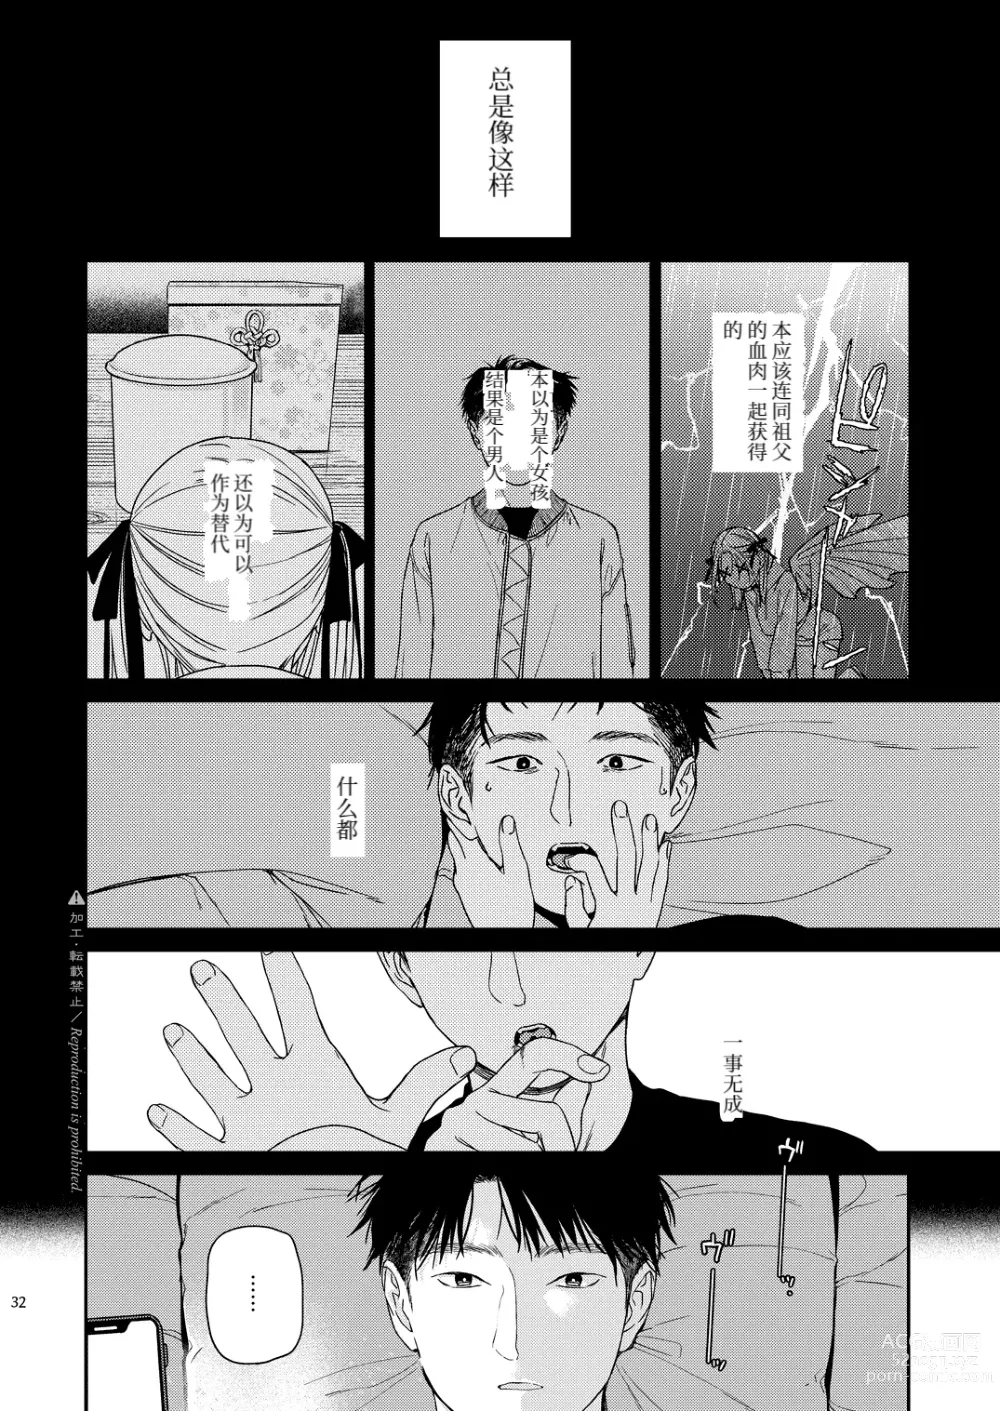 Page 34 of doujinshi Katami to Getsumei